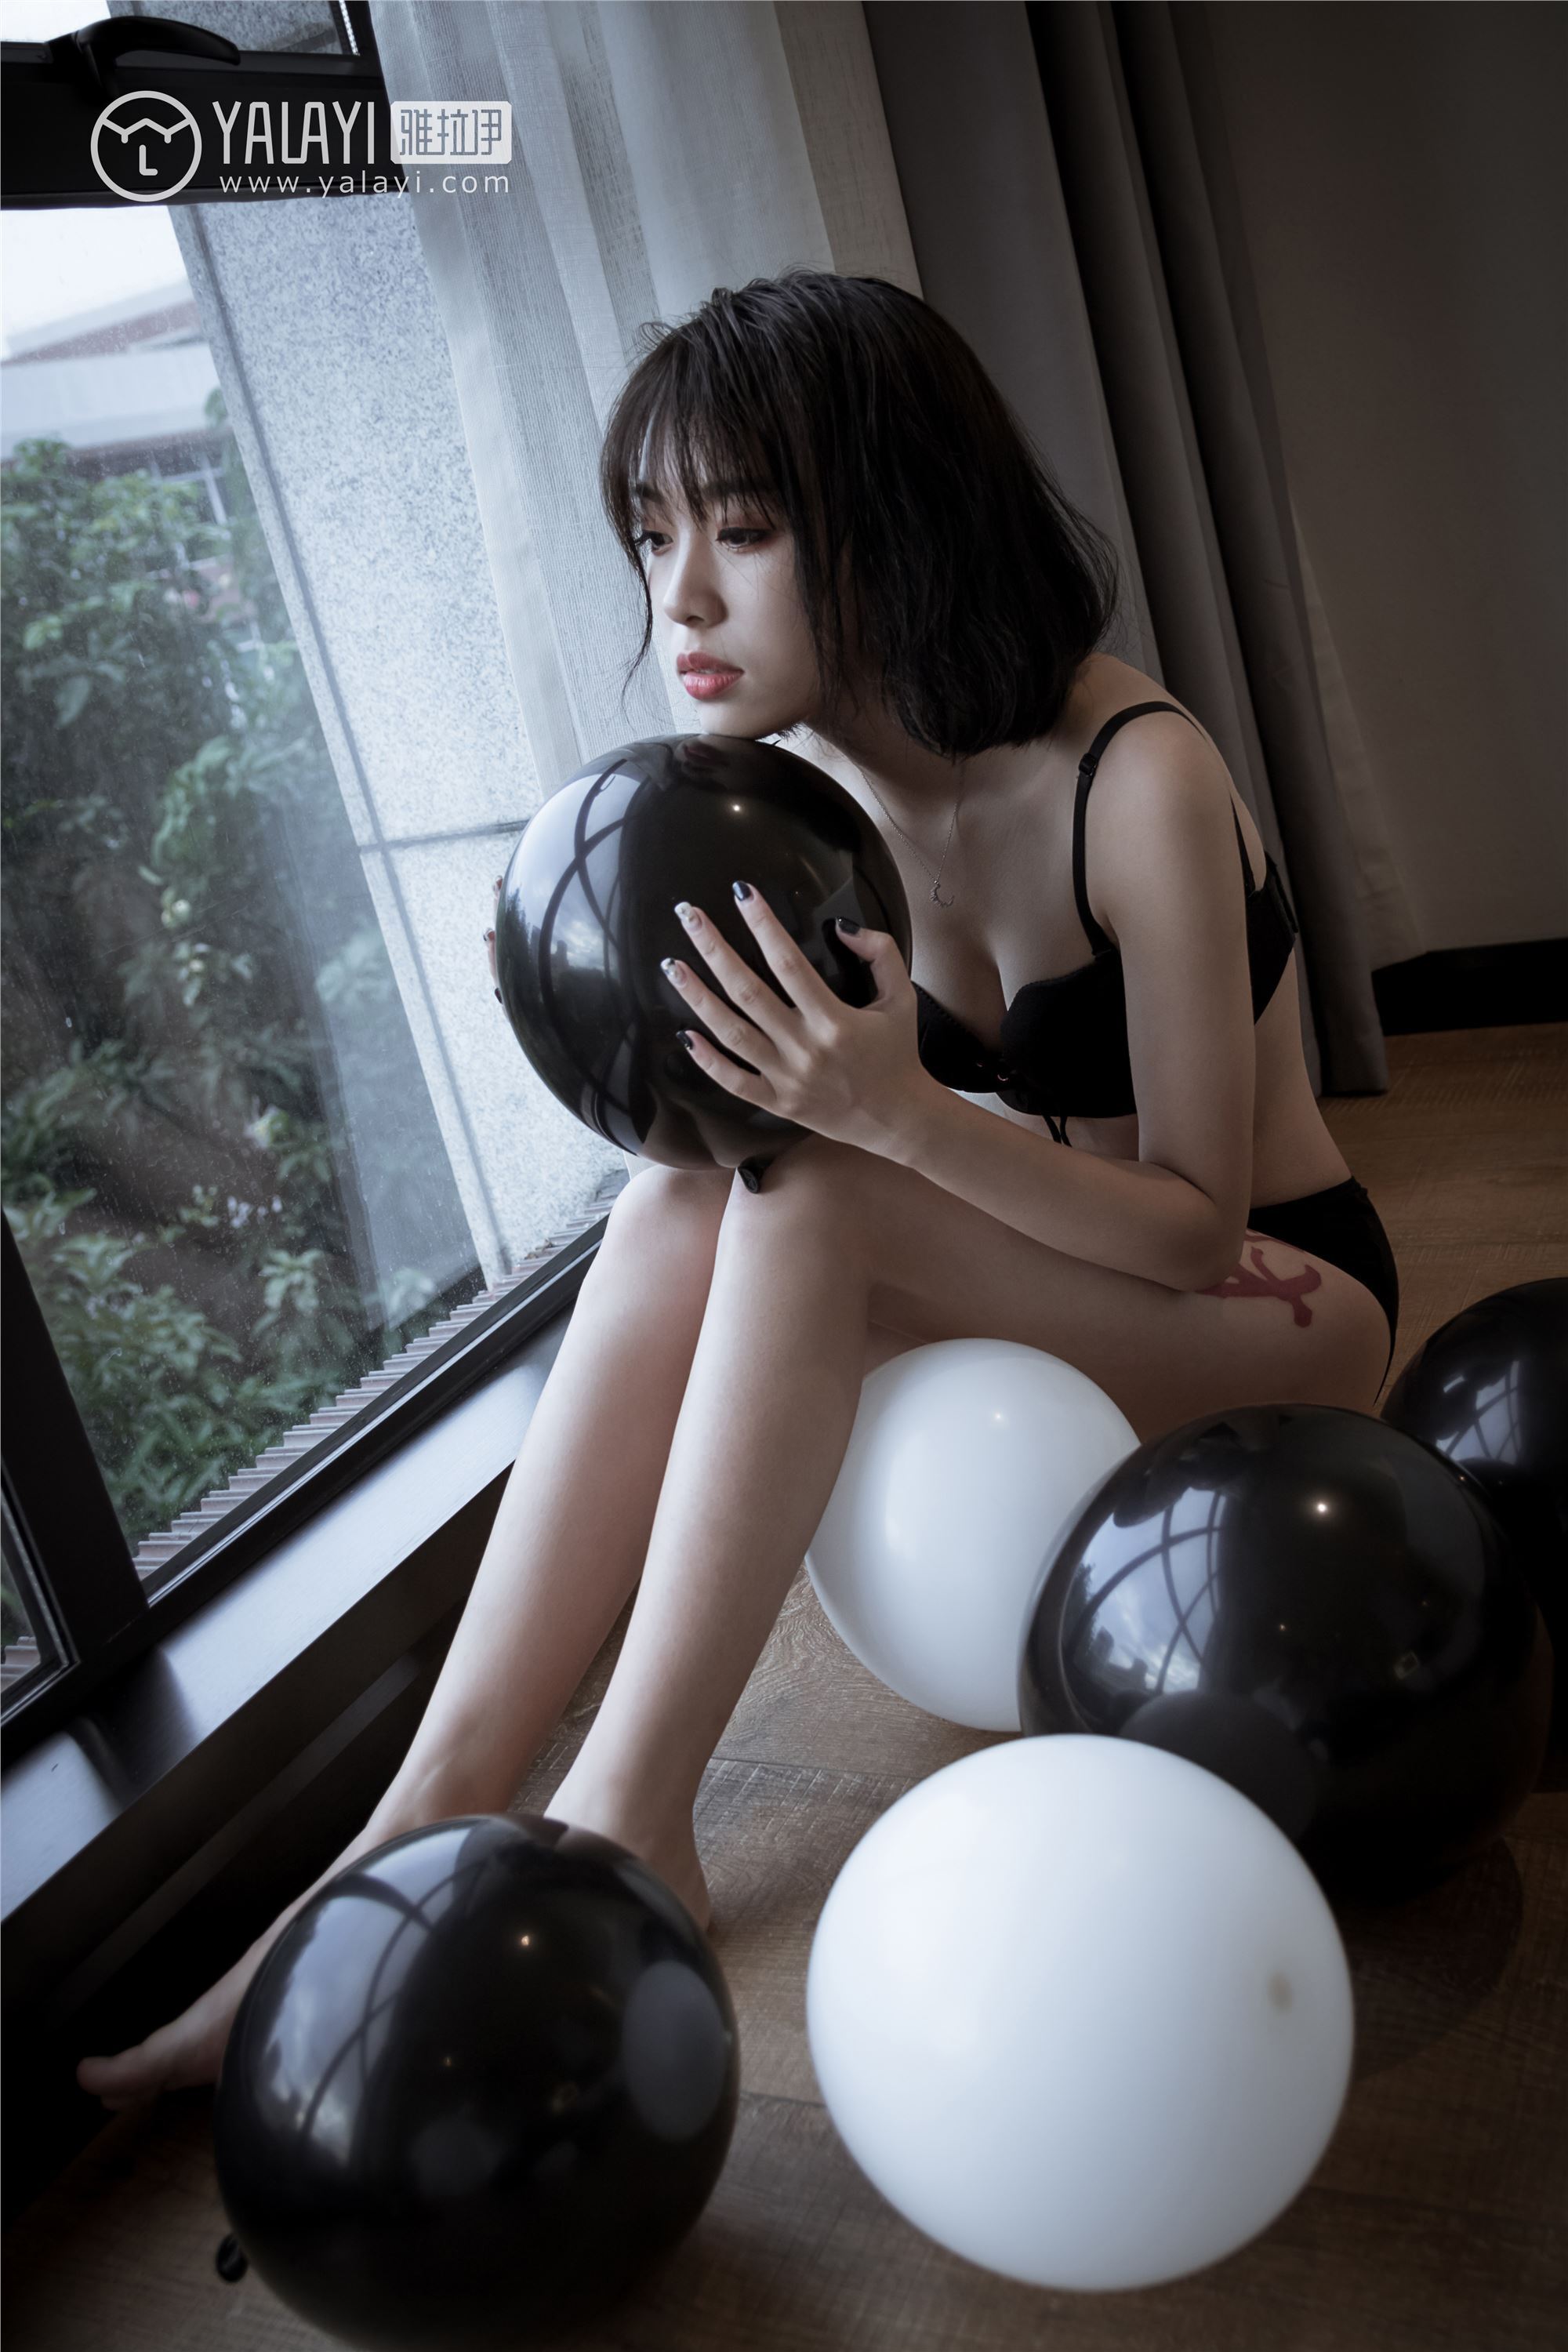 [yalayi yalayi] March 12, 2019 no.058 phantom balloon Xiao Yang